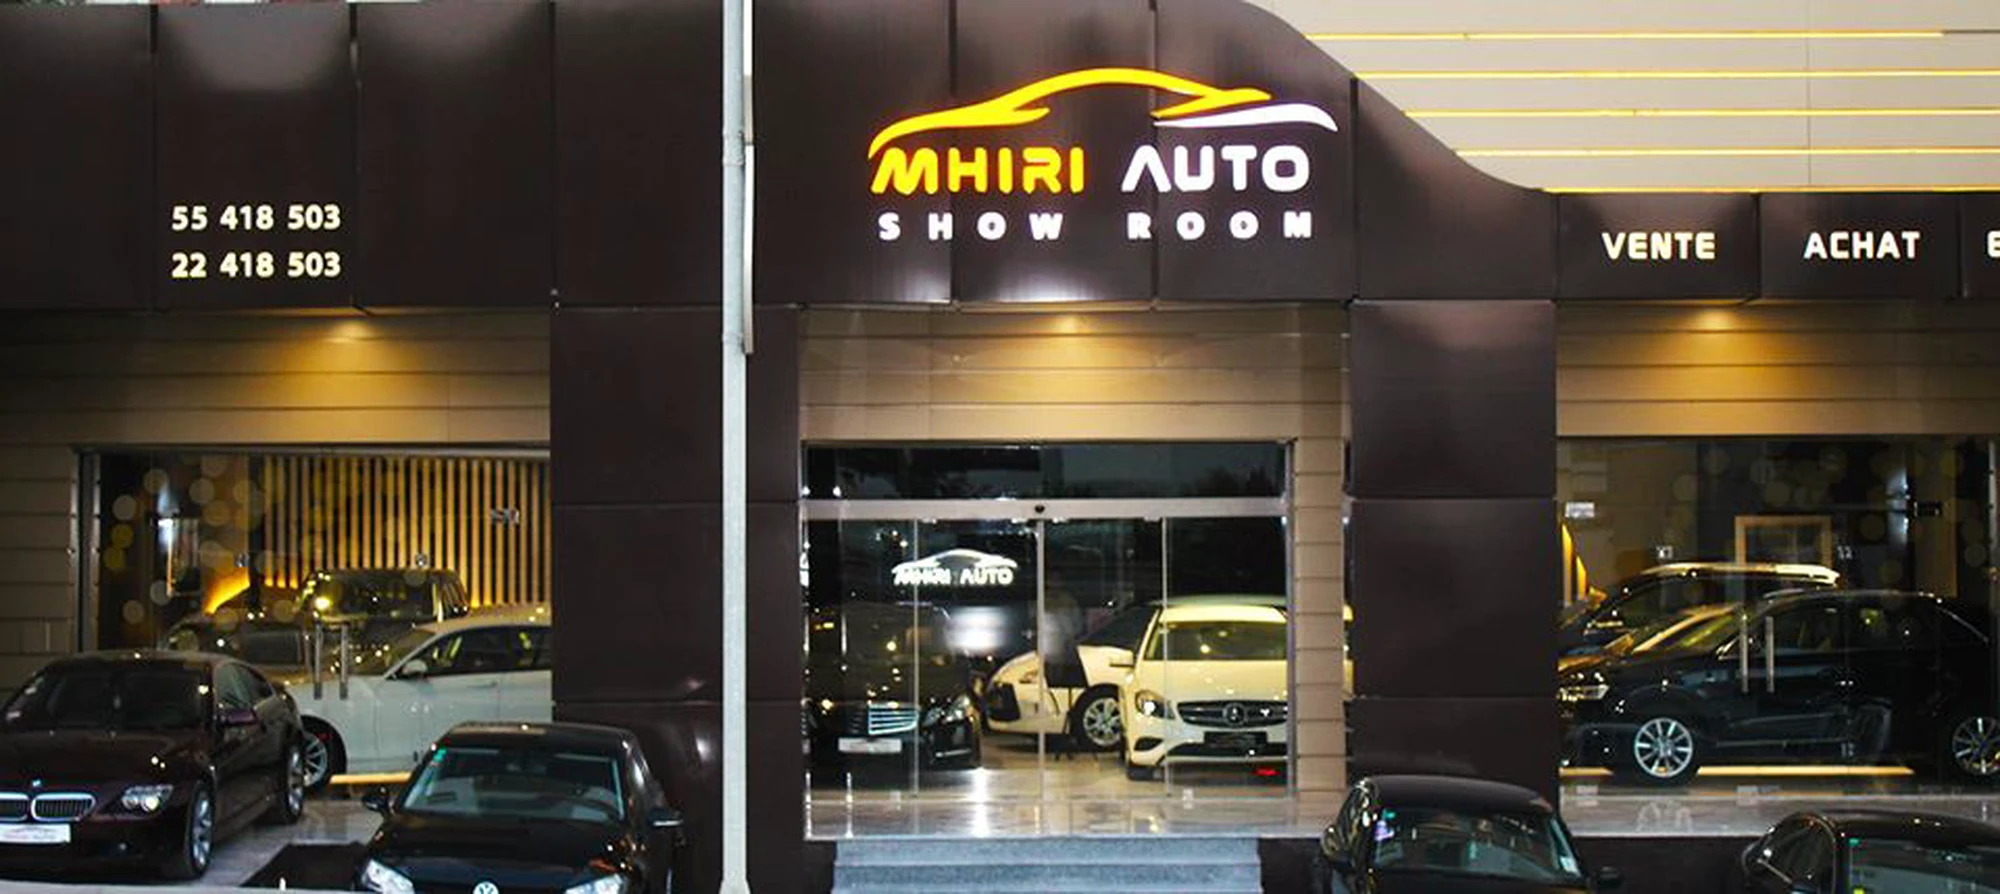 tayara shop cover of MHIRI AUTO